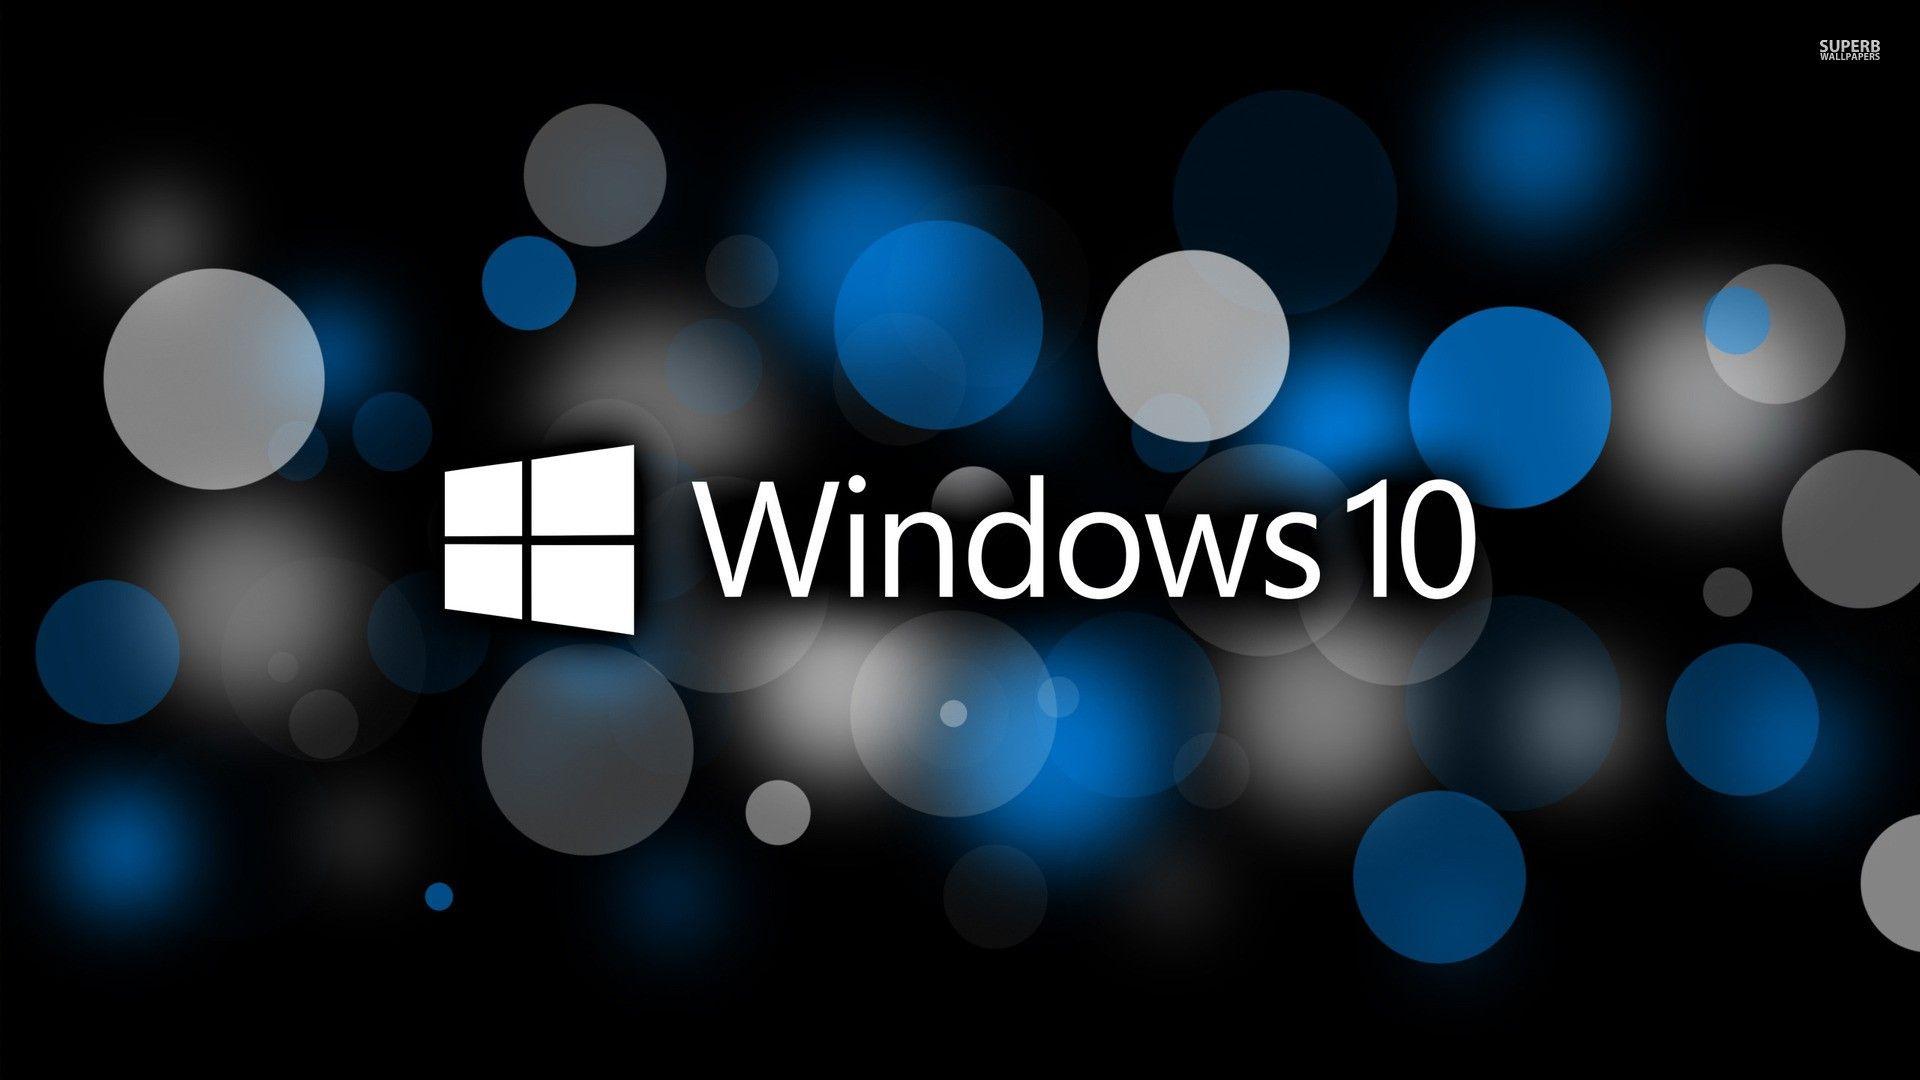 Windows 10 HD Wallpaper 1080p Free Download (Picture)